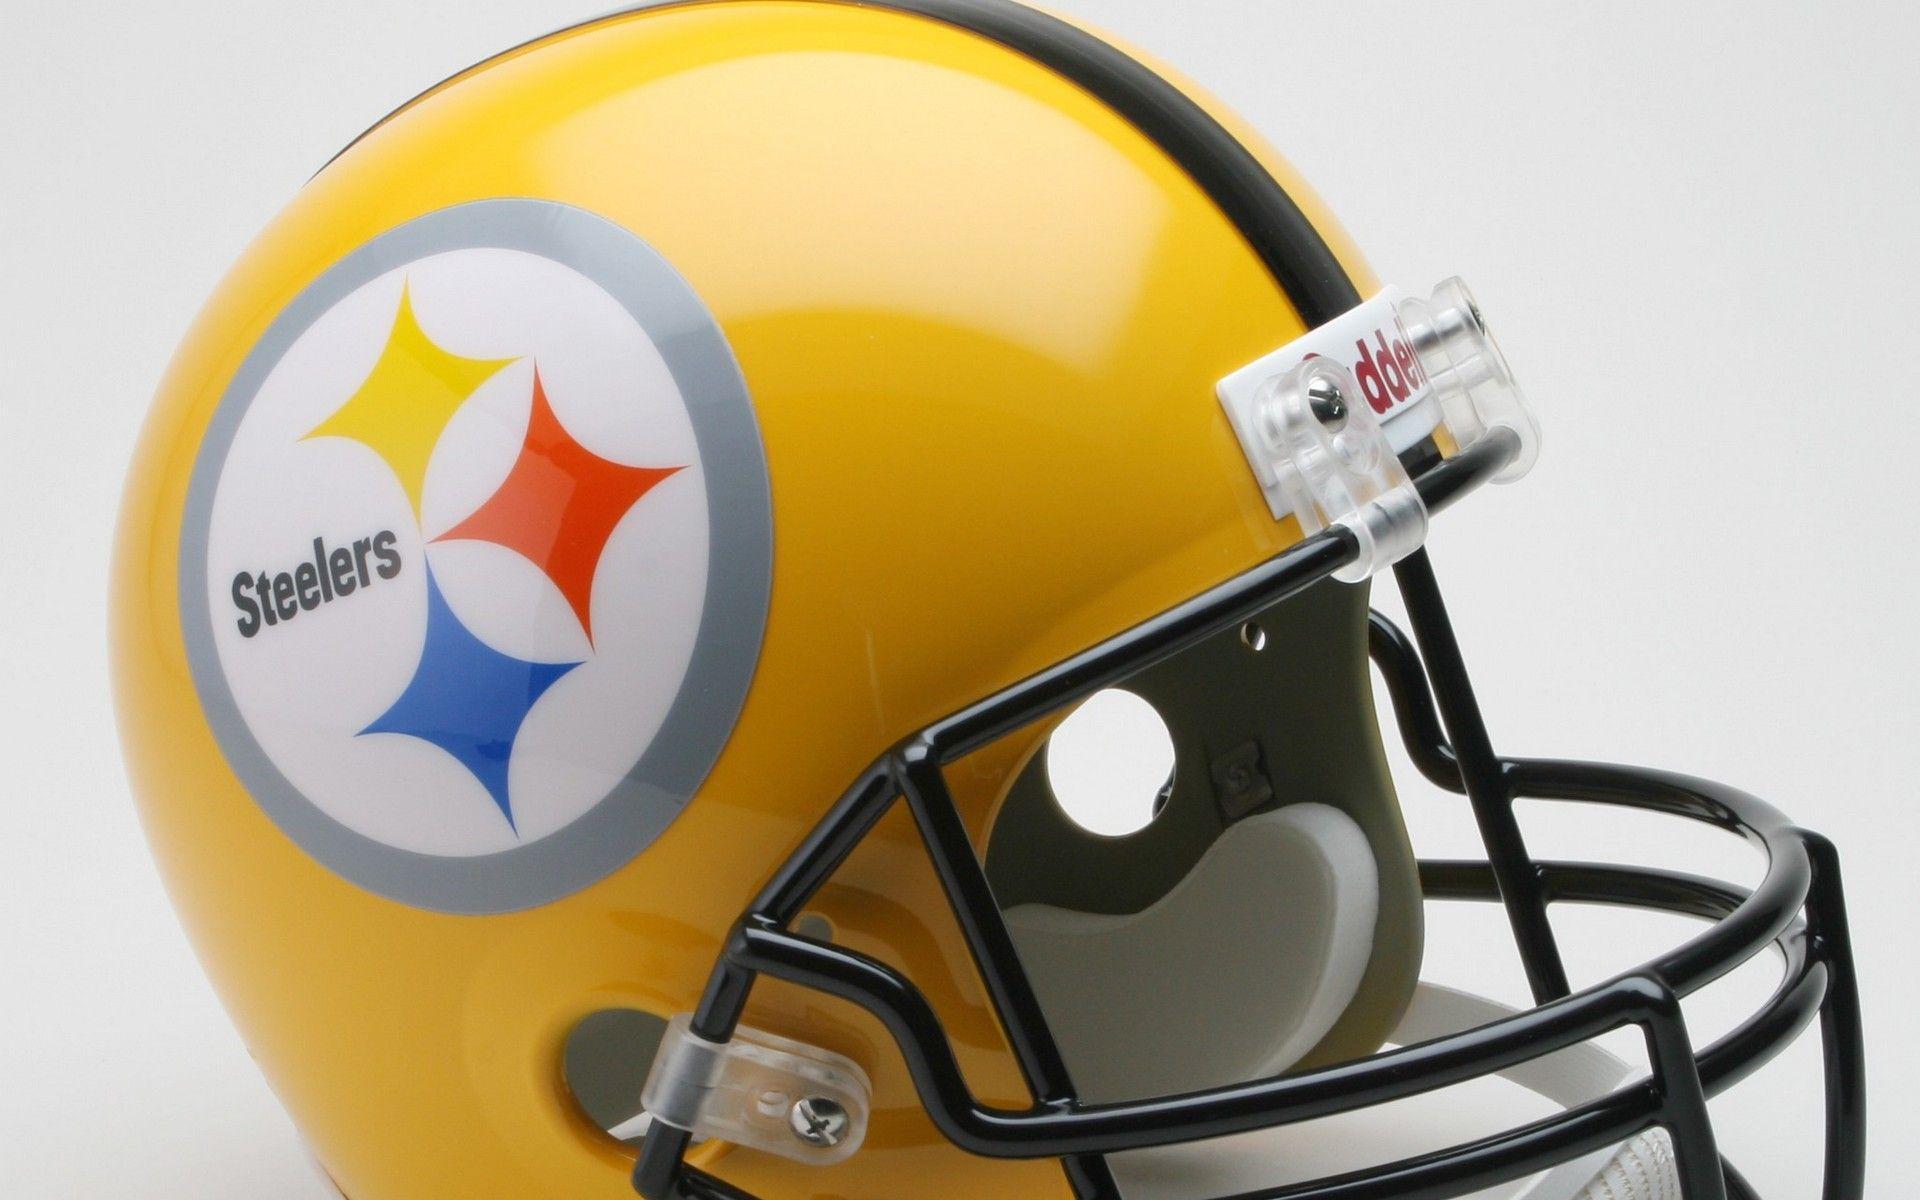 Pittsburgh Steelers Wallpaper 2014. Sky HD Wallpaper